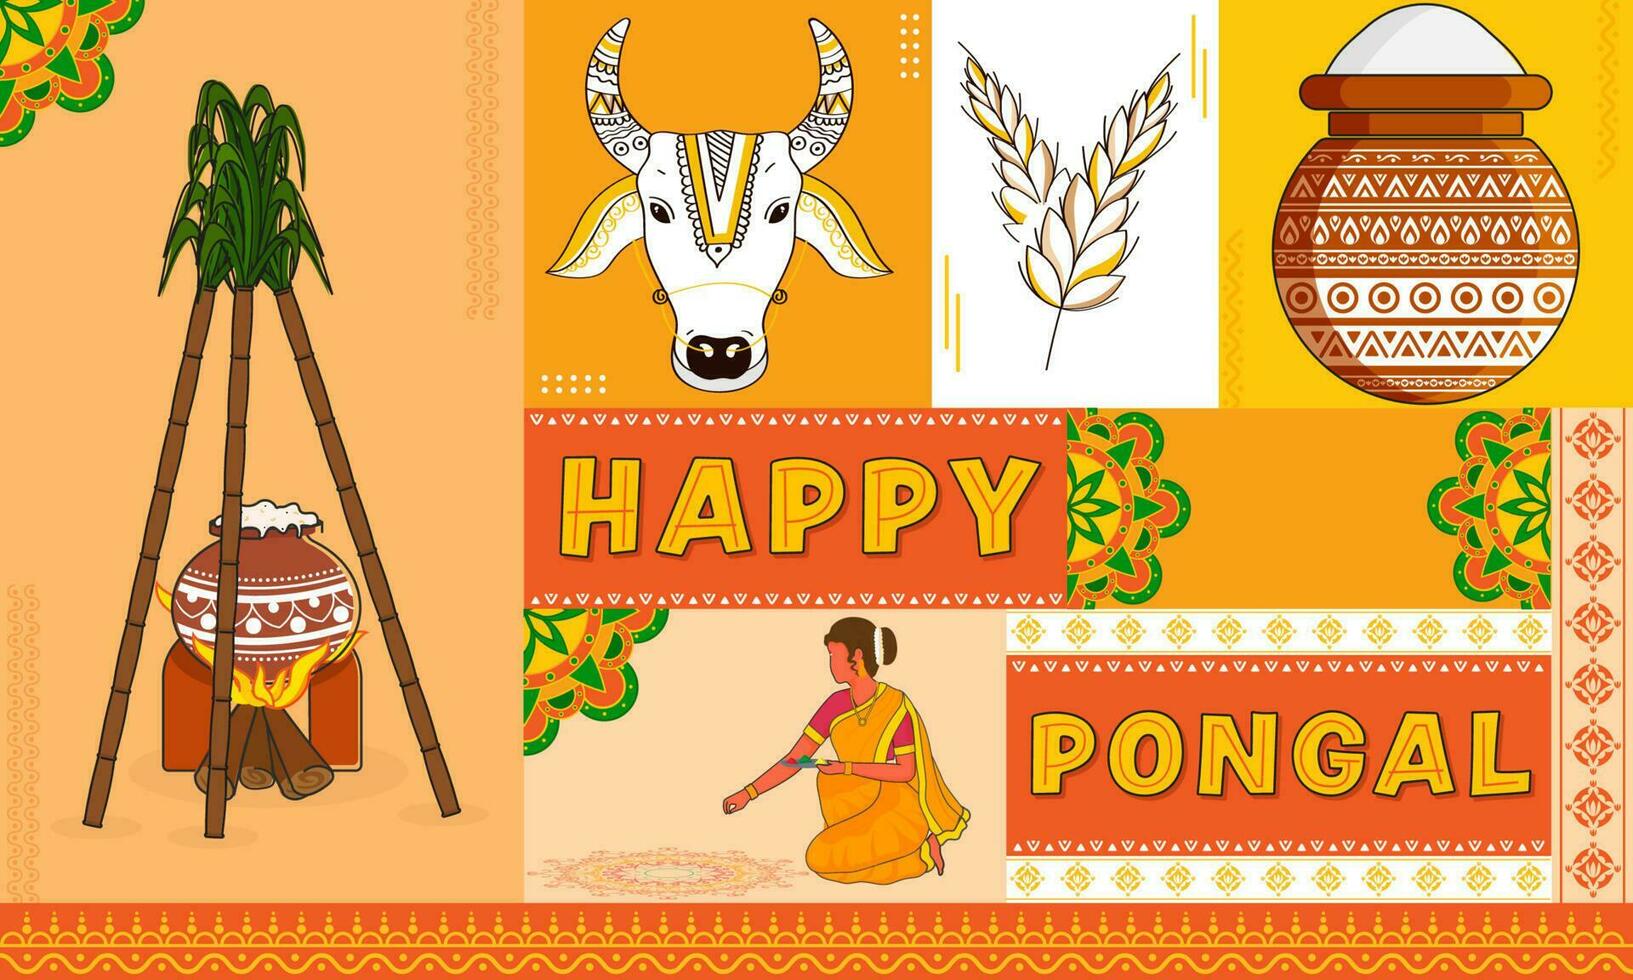 contento pongal celebracion antecedentes con sur indio mujer, tradicional plato Cocinando a hoguera, vaca o toro cara y Caña de azúcar. vector